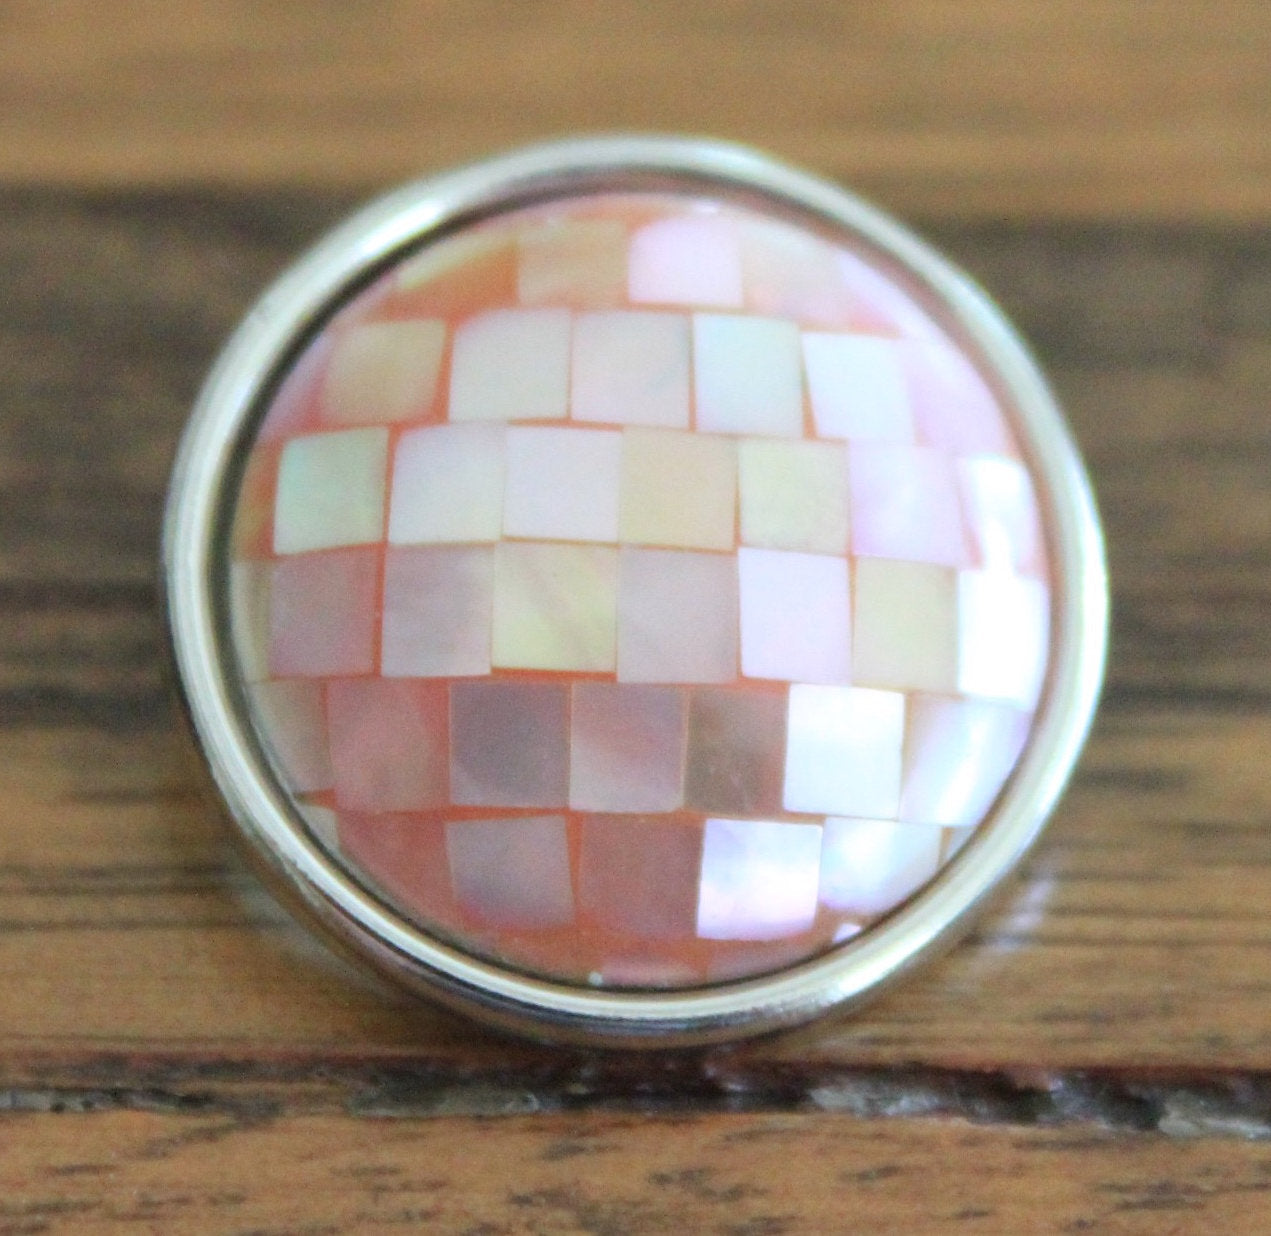 disco light pink pixel mosaic pattern painted stone button